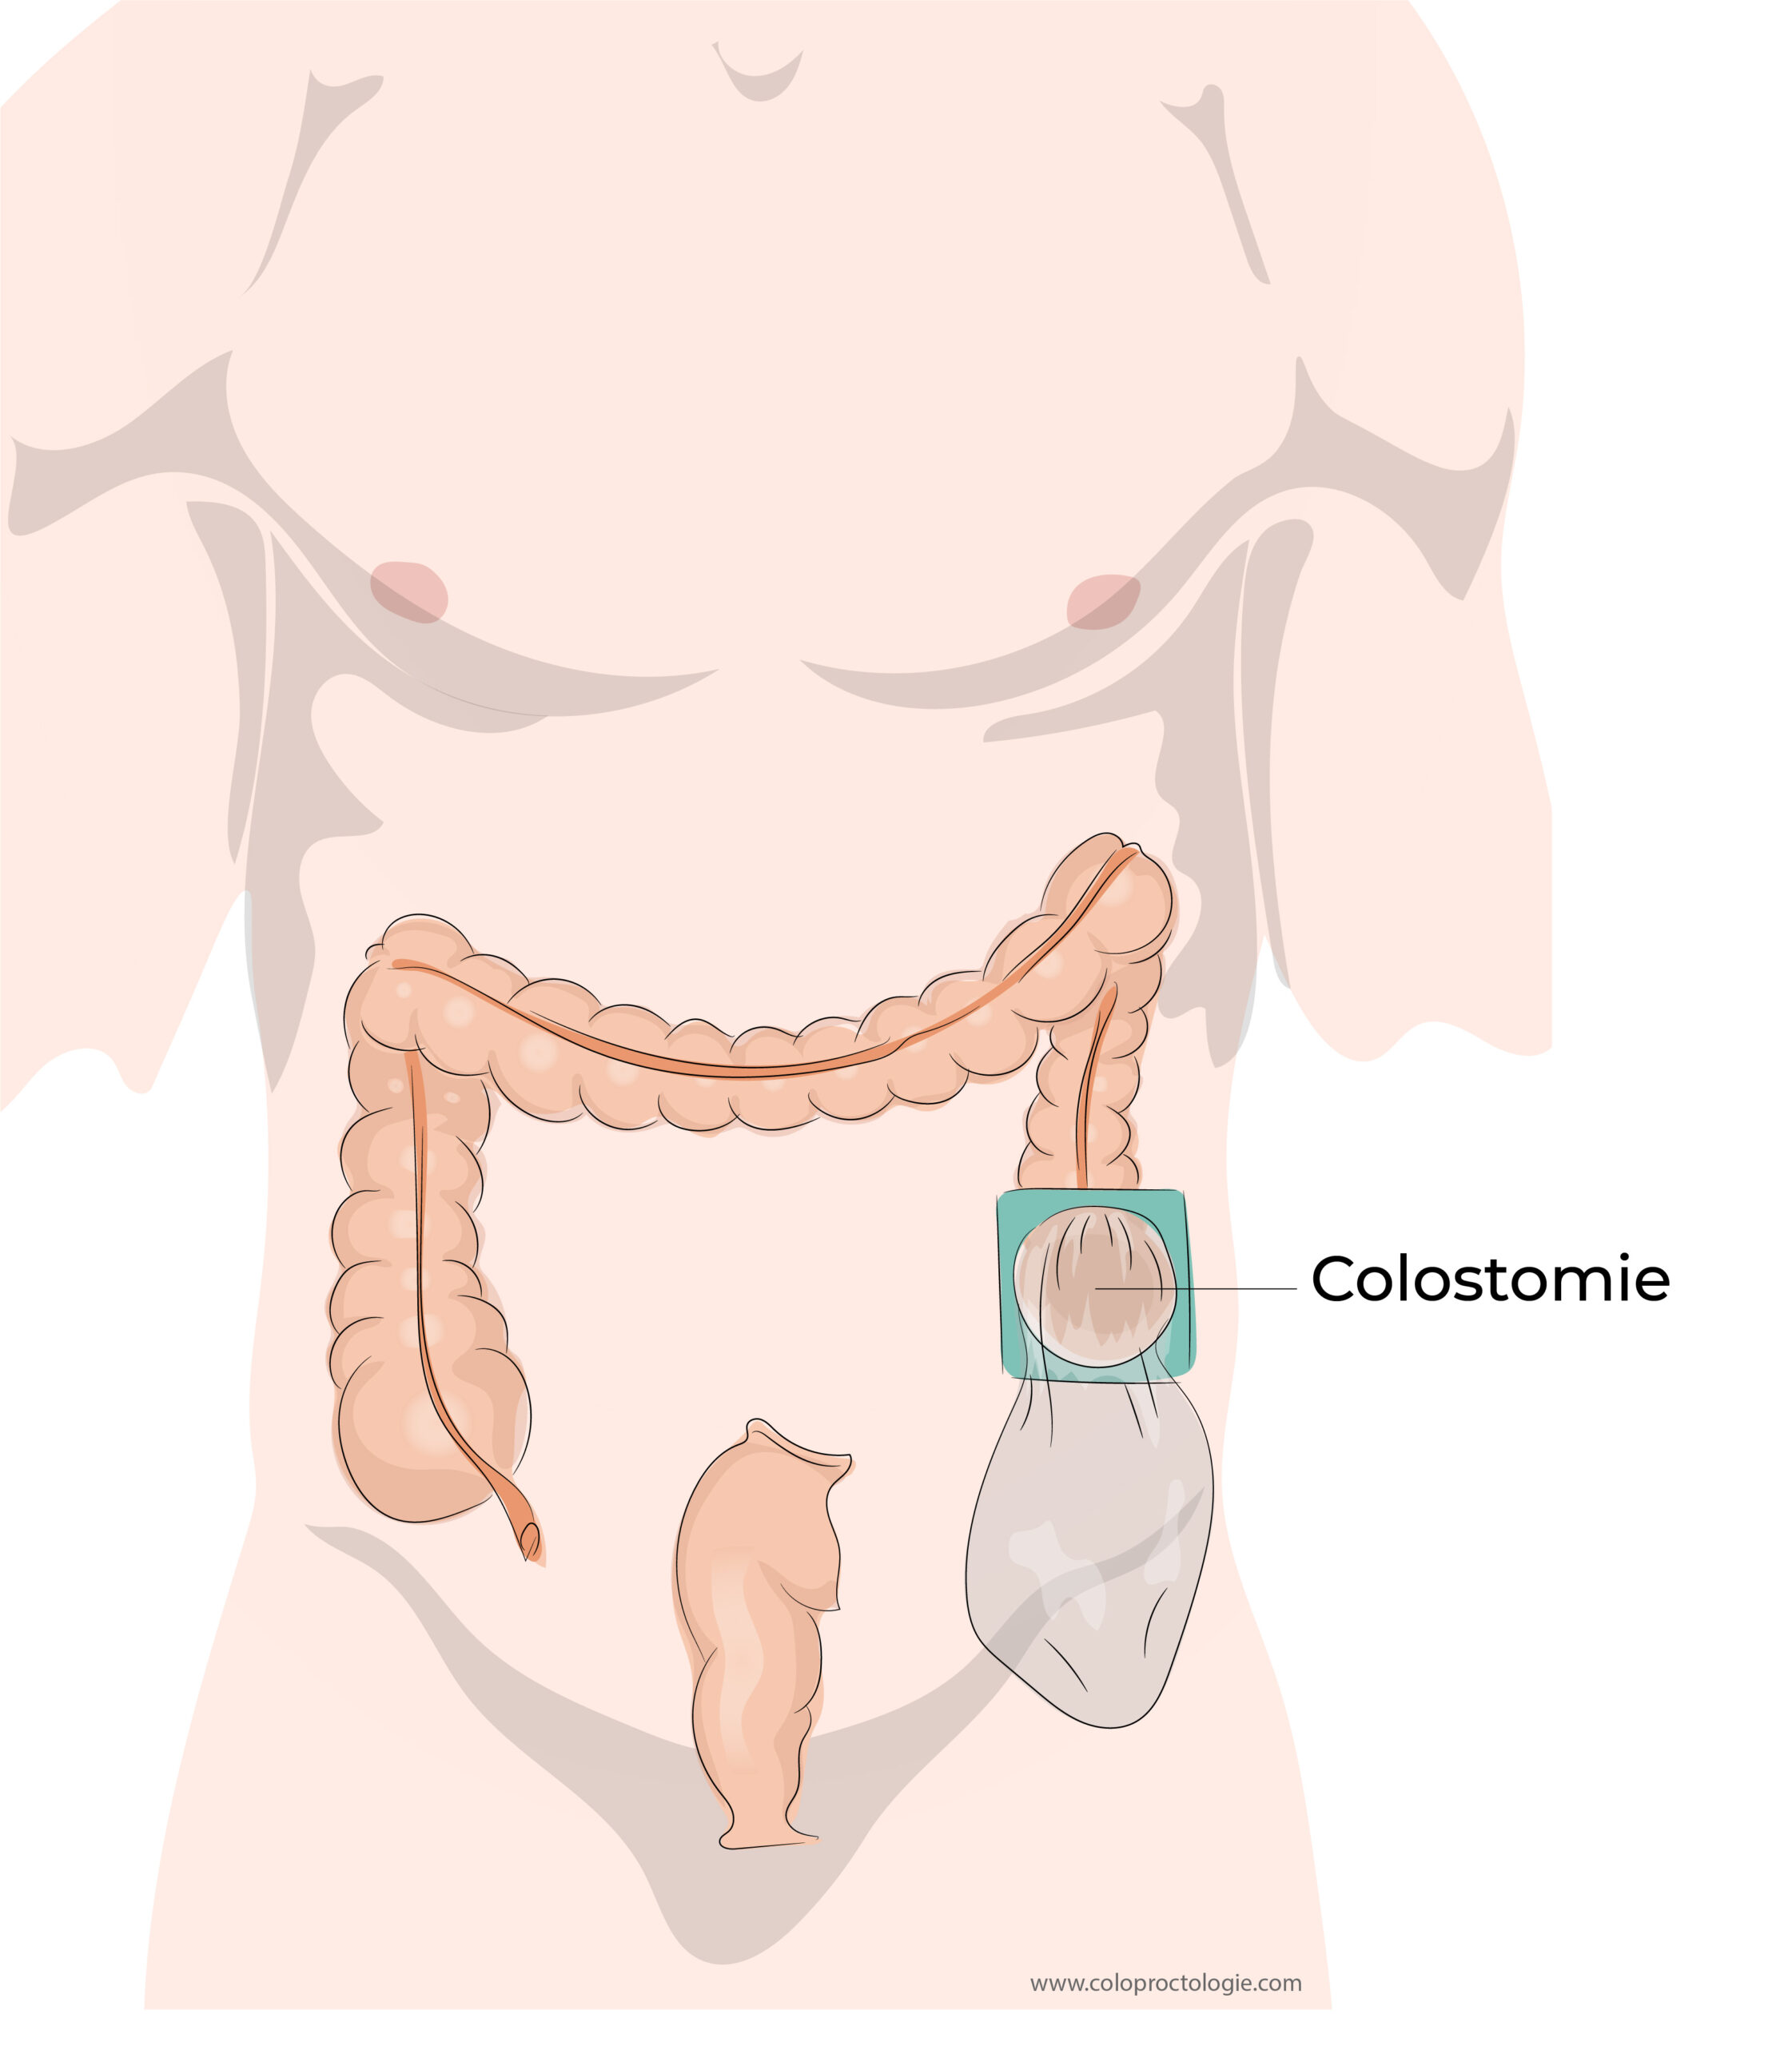 Colectomie droite - Coloproctologie